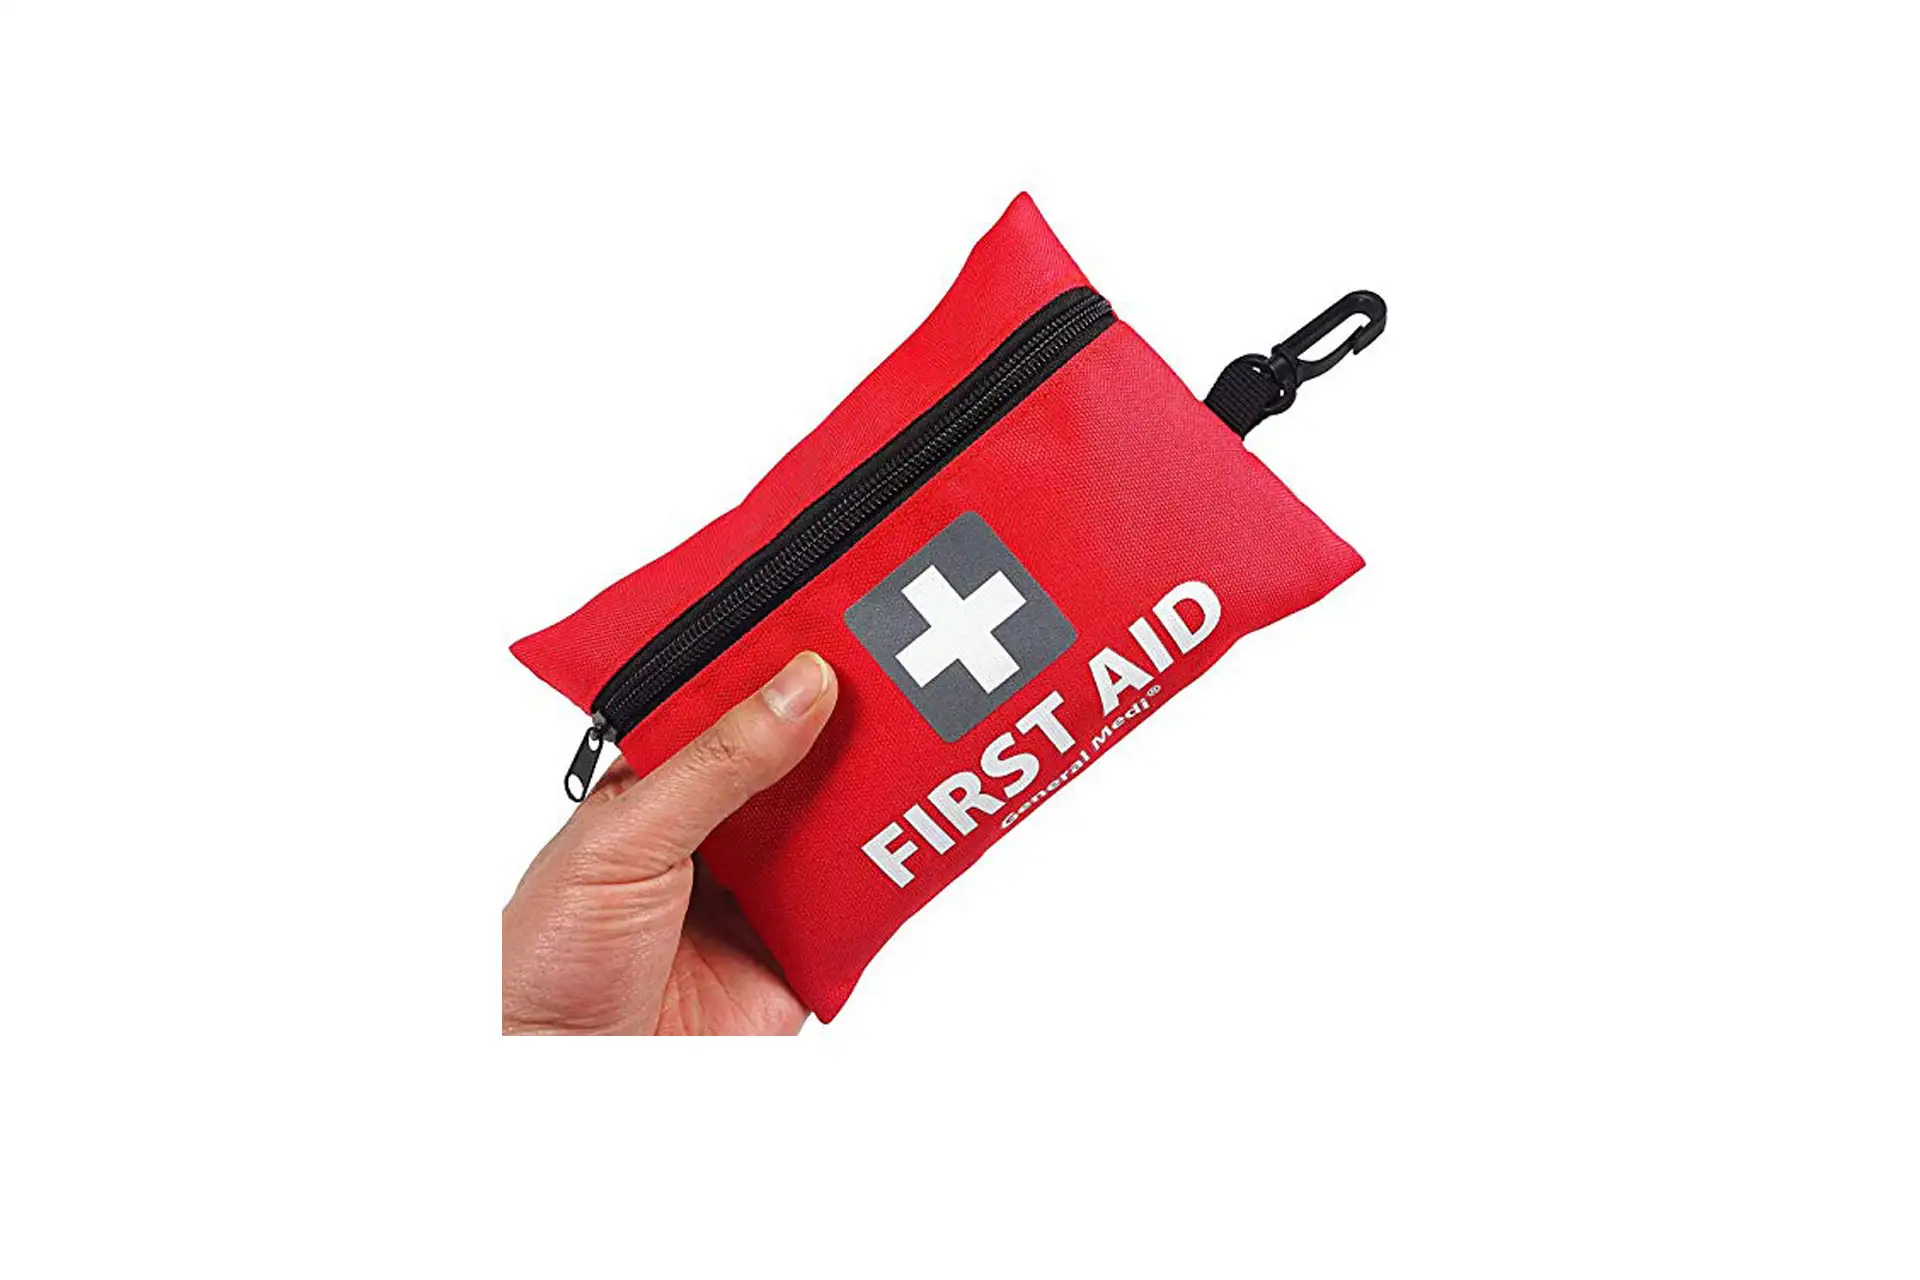 Travel First Aid kit; Courtesy of Amazon